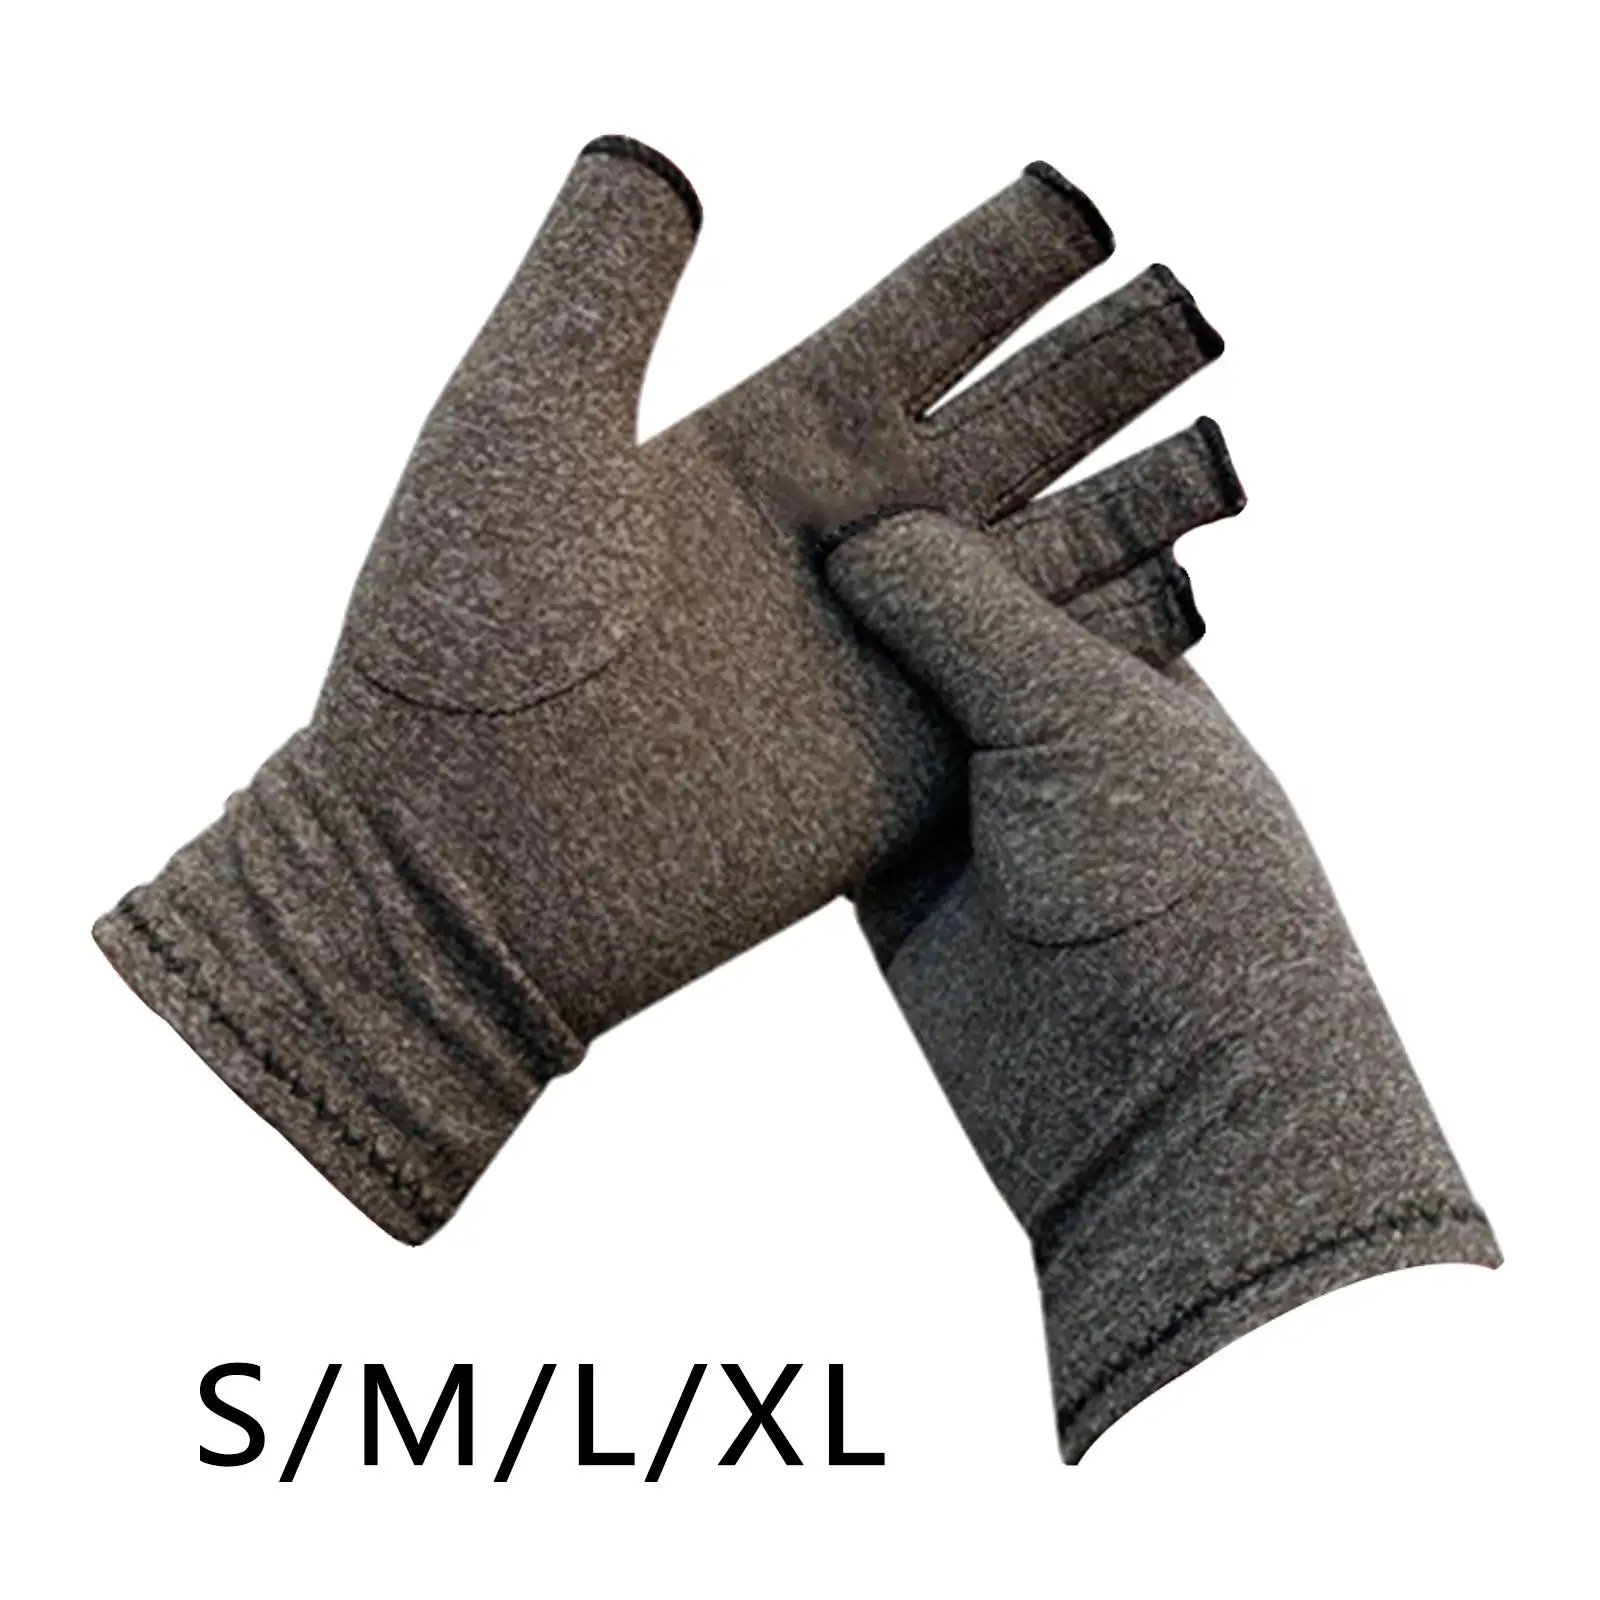 Fingerless Arthritis Compression Gloves Hand Gloves Fingerless Arthritis Gloves for Increase Blood Flow Computer Typing Fitness